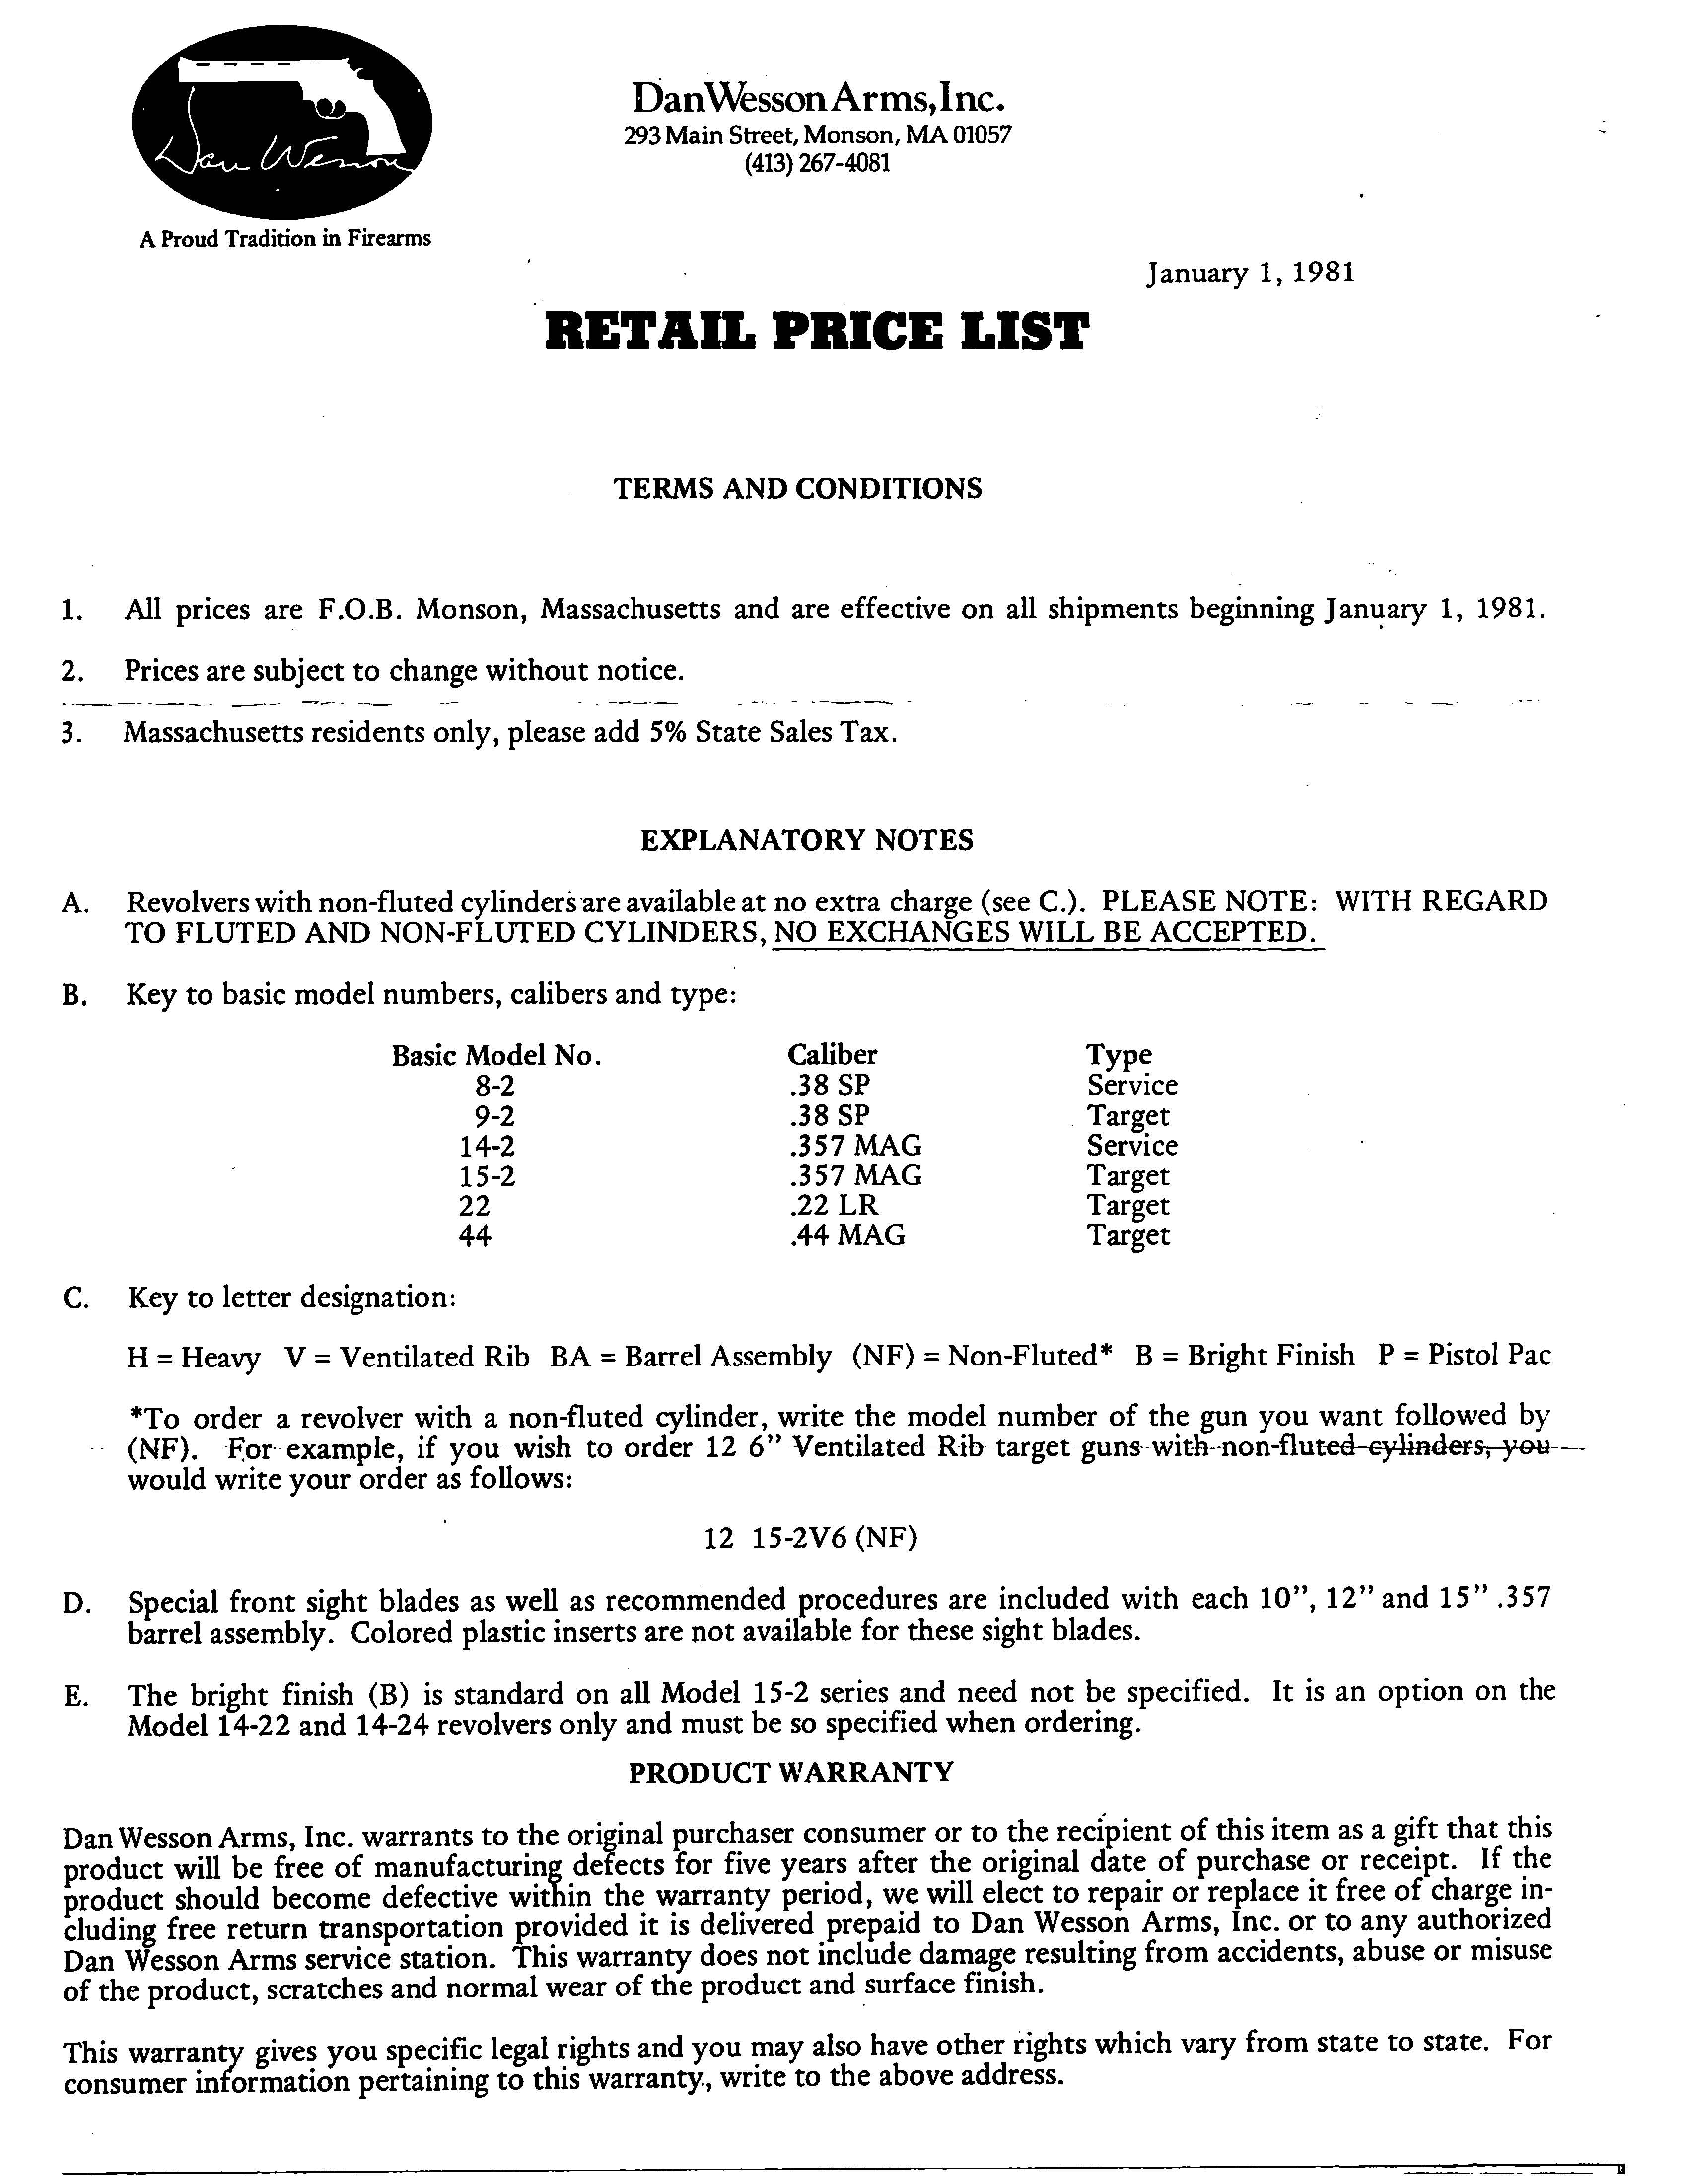 Dan-Wesson-Retail-Prices-81-pg1.jpg